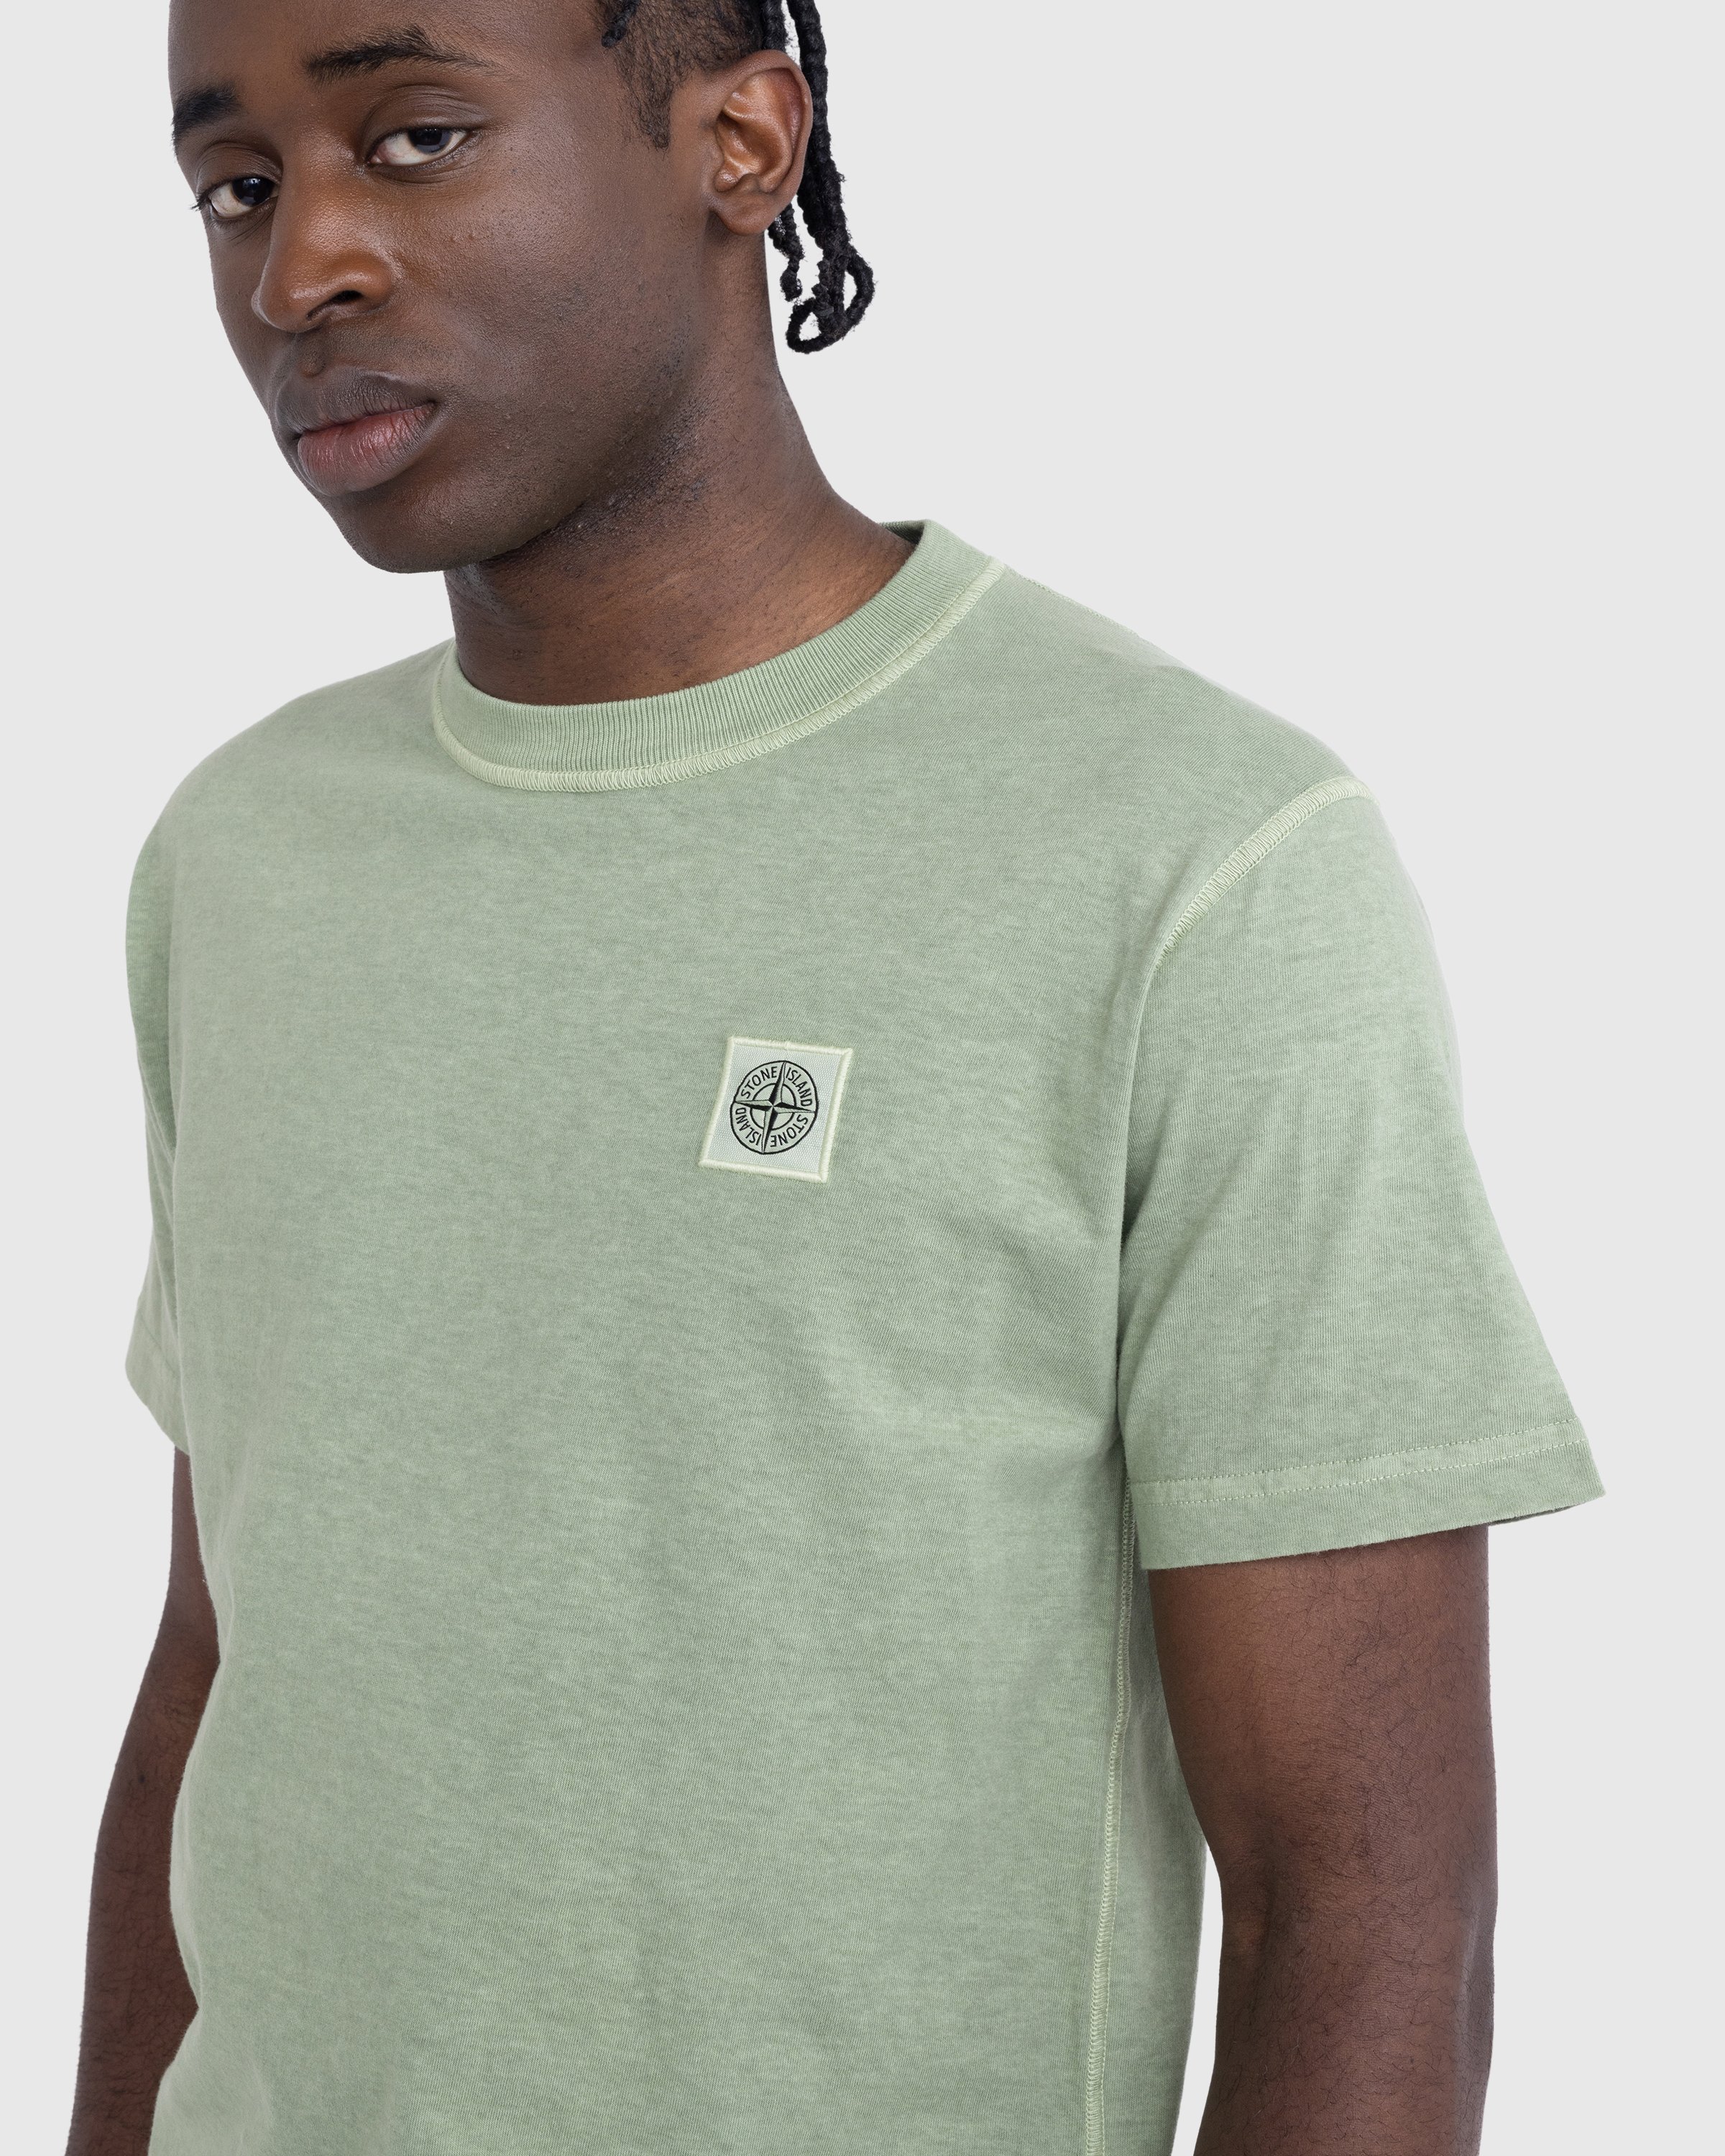 Stone Island - T-Shirt Green 23757 - Clothing - Green - Image 4